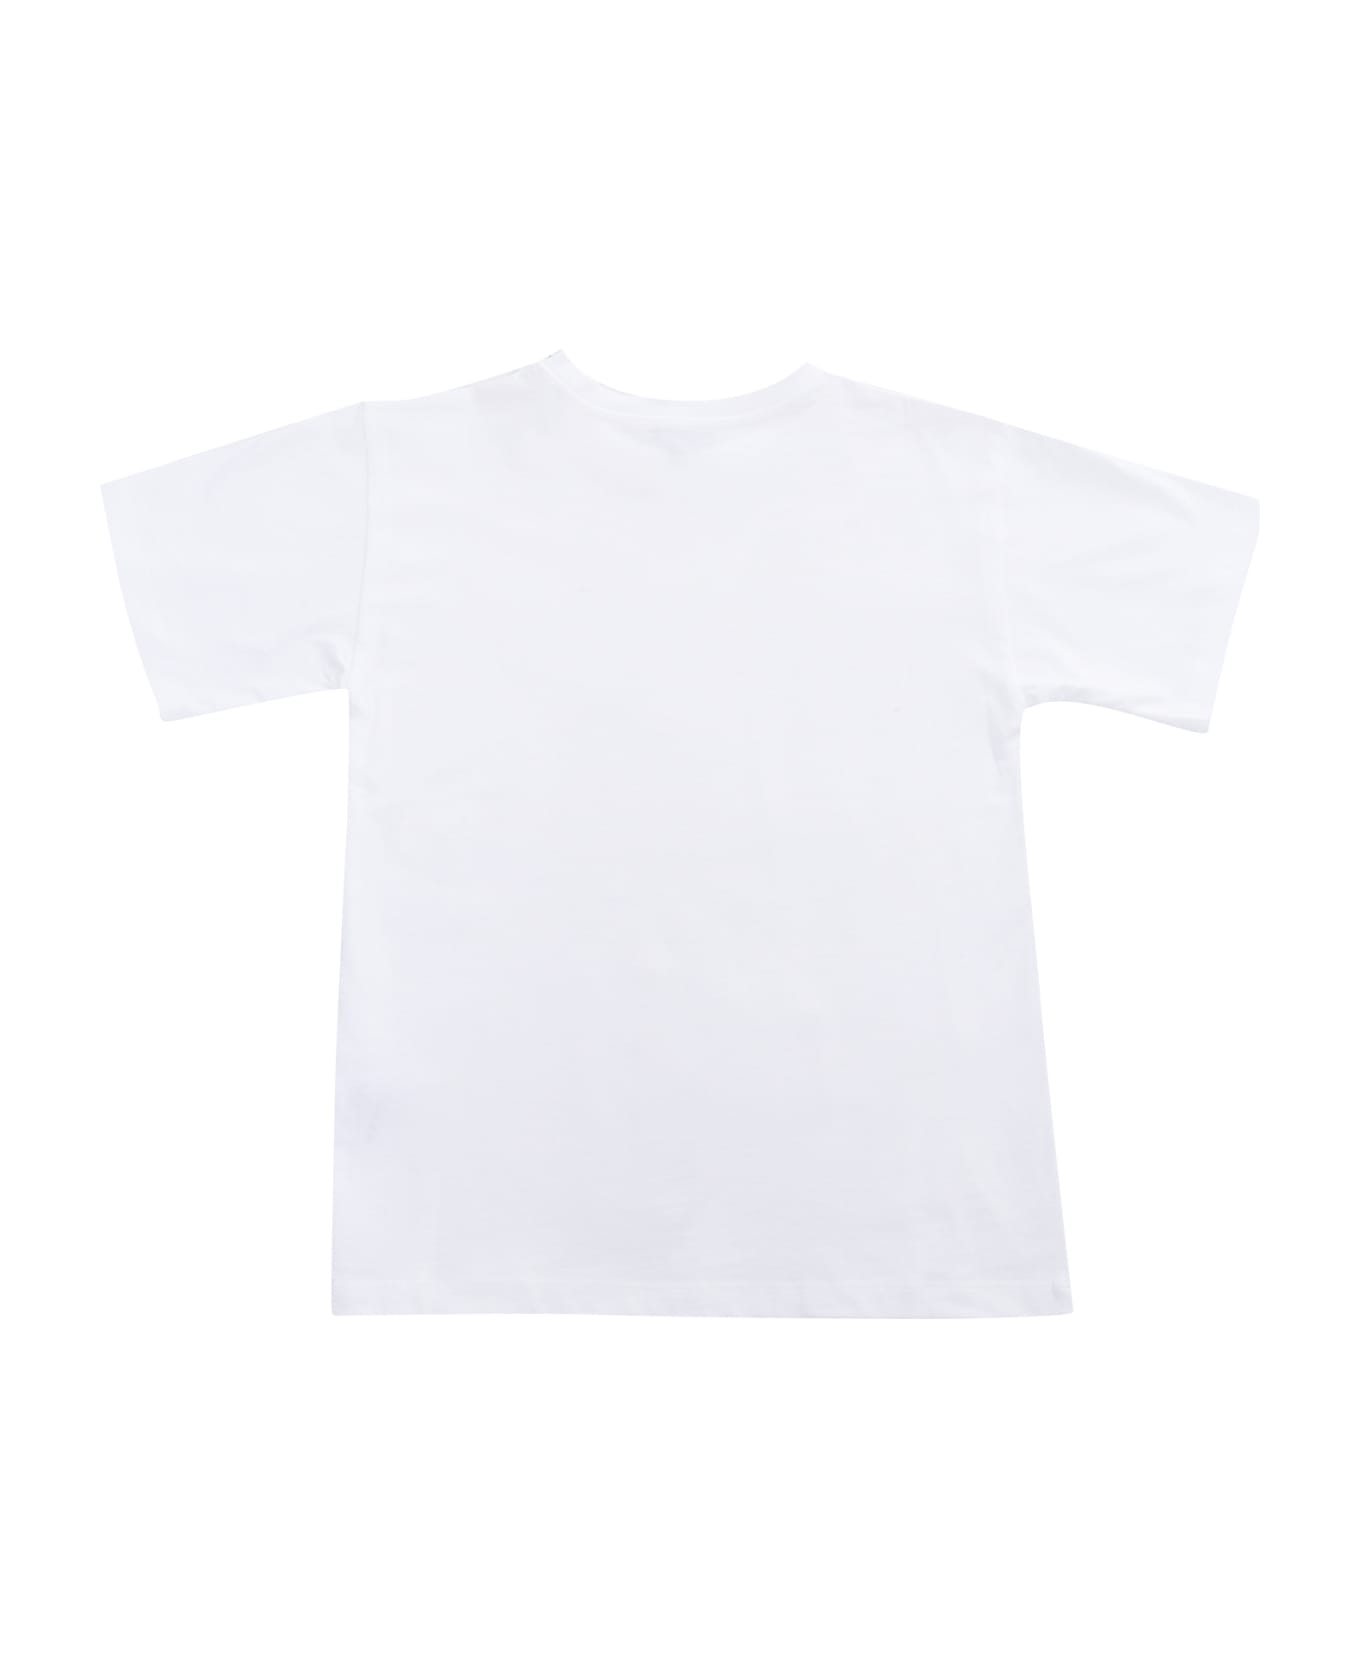 Moschino White T-shirt With Logo - WHITE